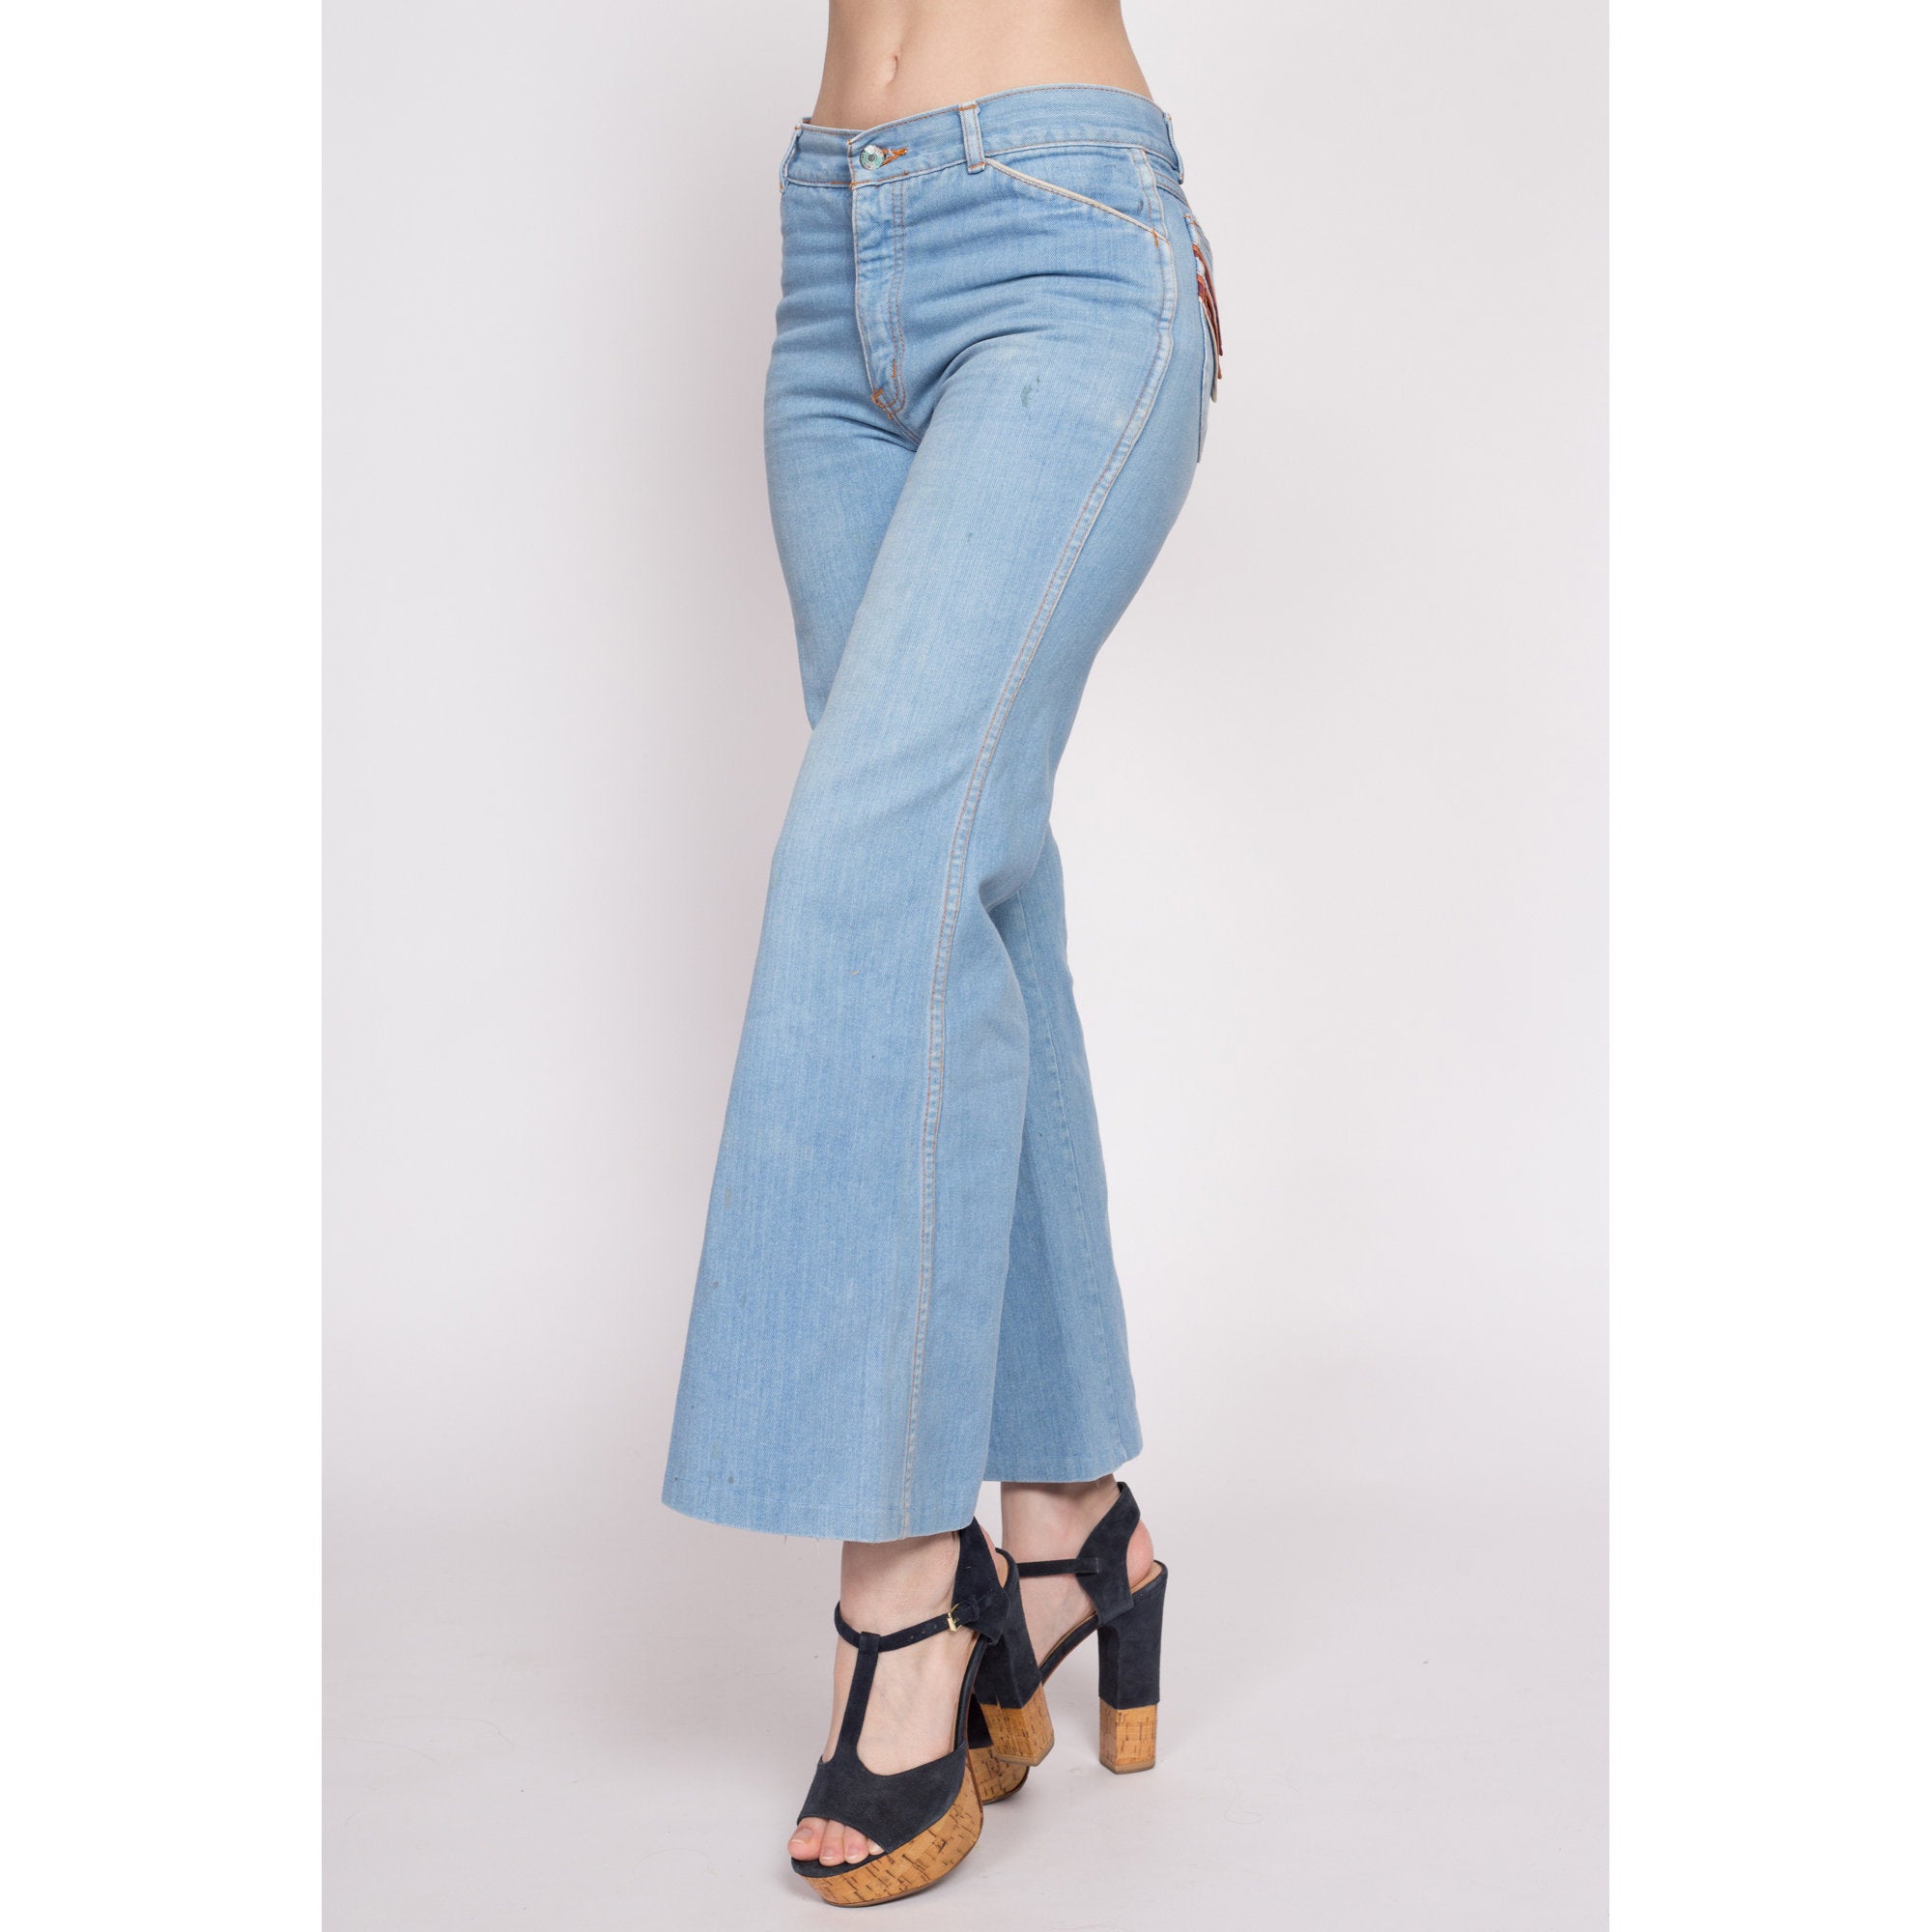 Women Destoryed Flare Jeans Elastic Waist Ripped Bell Bottom Raw Hem  Stretch Denim Pants (Light Blue, Small) at Amazon Women's Jeans store